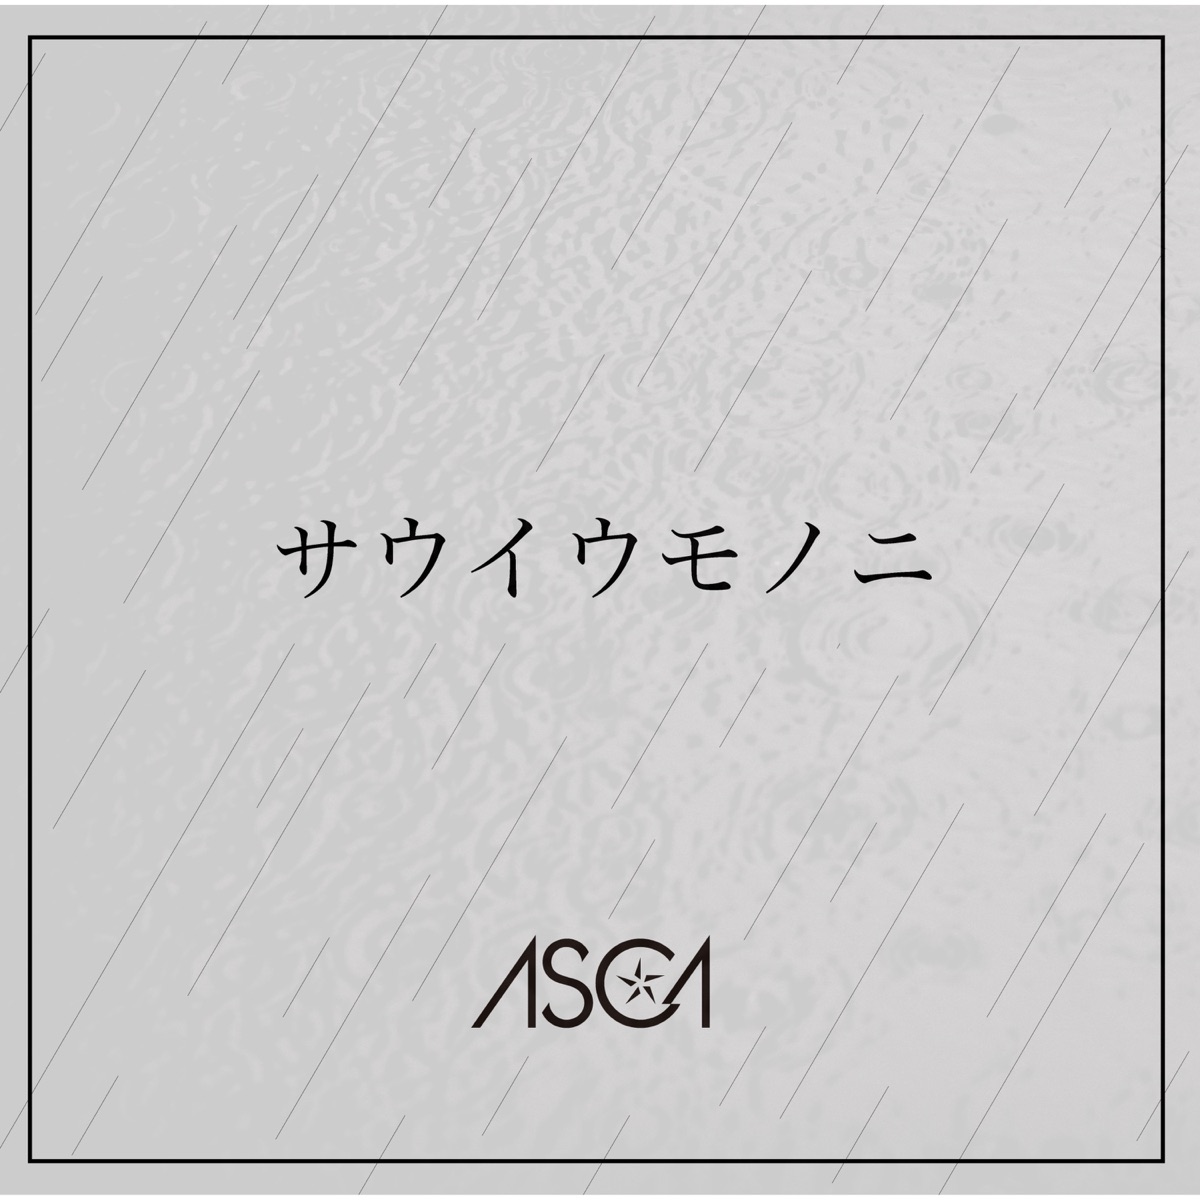 Cover art for『ASCA - サウイウモノニ』from the release『Sauiumononi